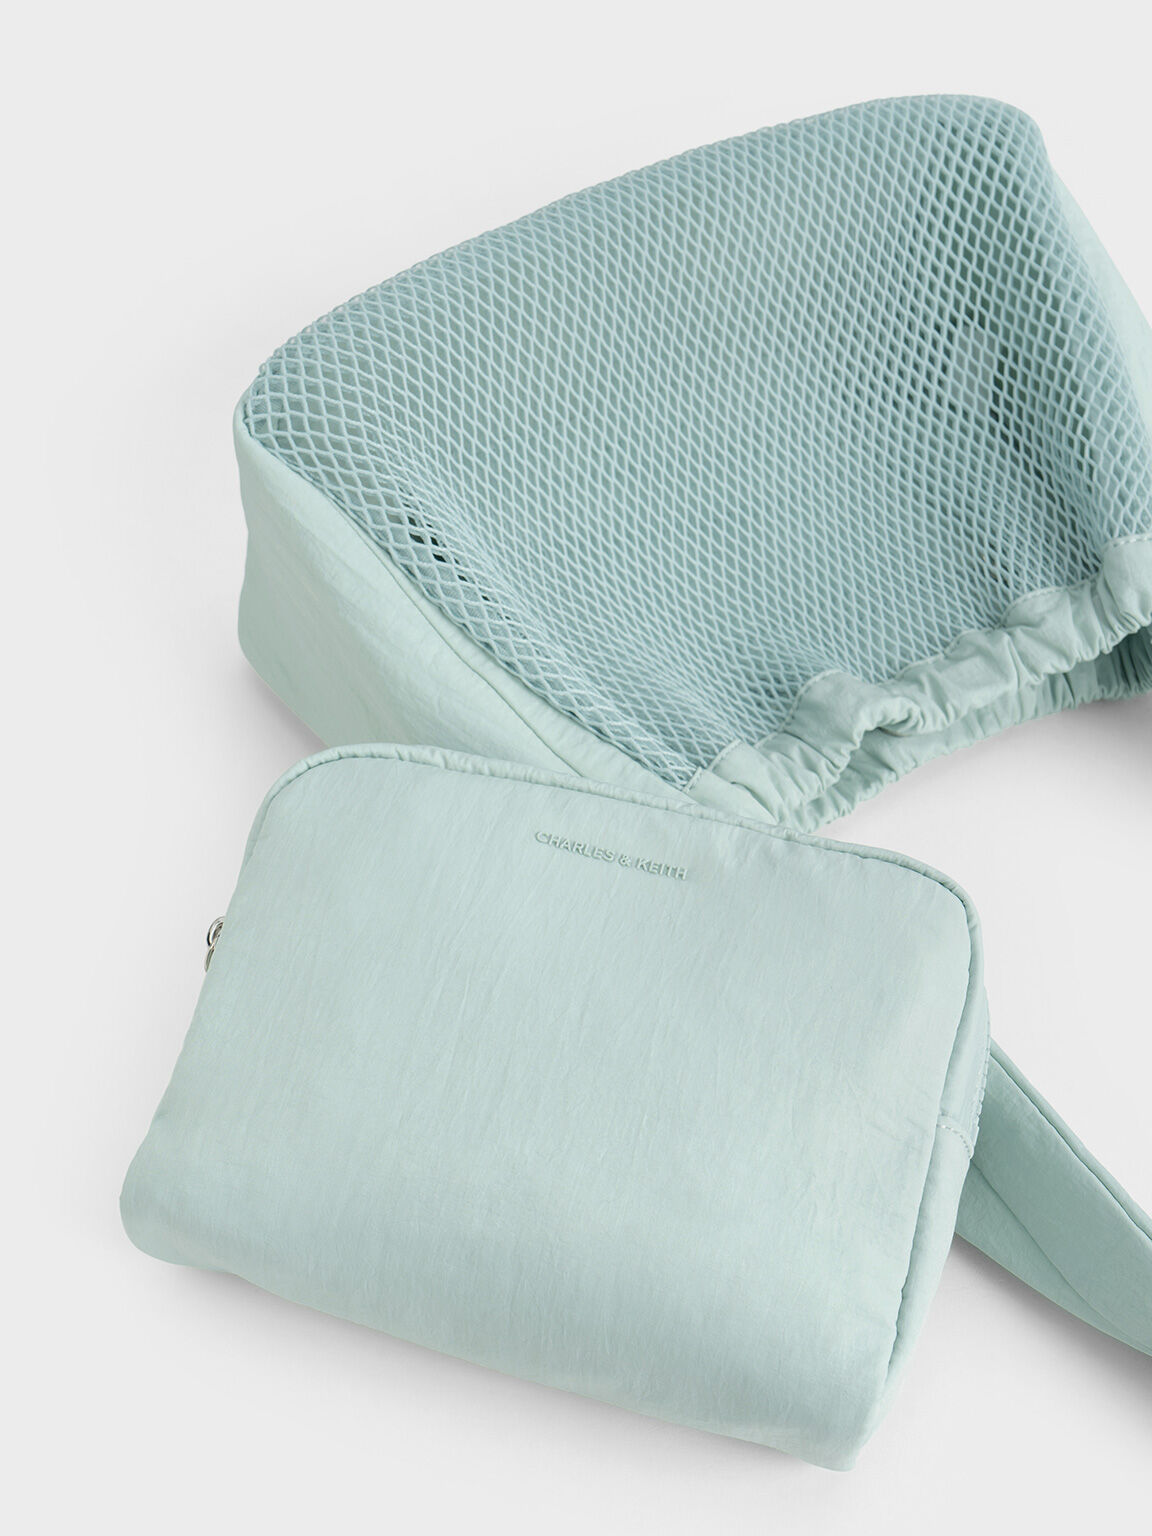 Terra Mesh & Nylon Shoulder Bag, Sage Green, hi-res